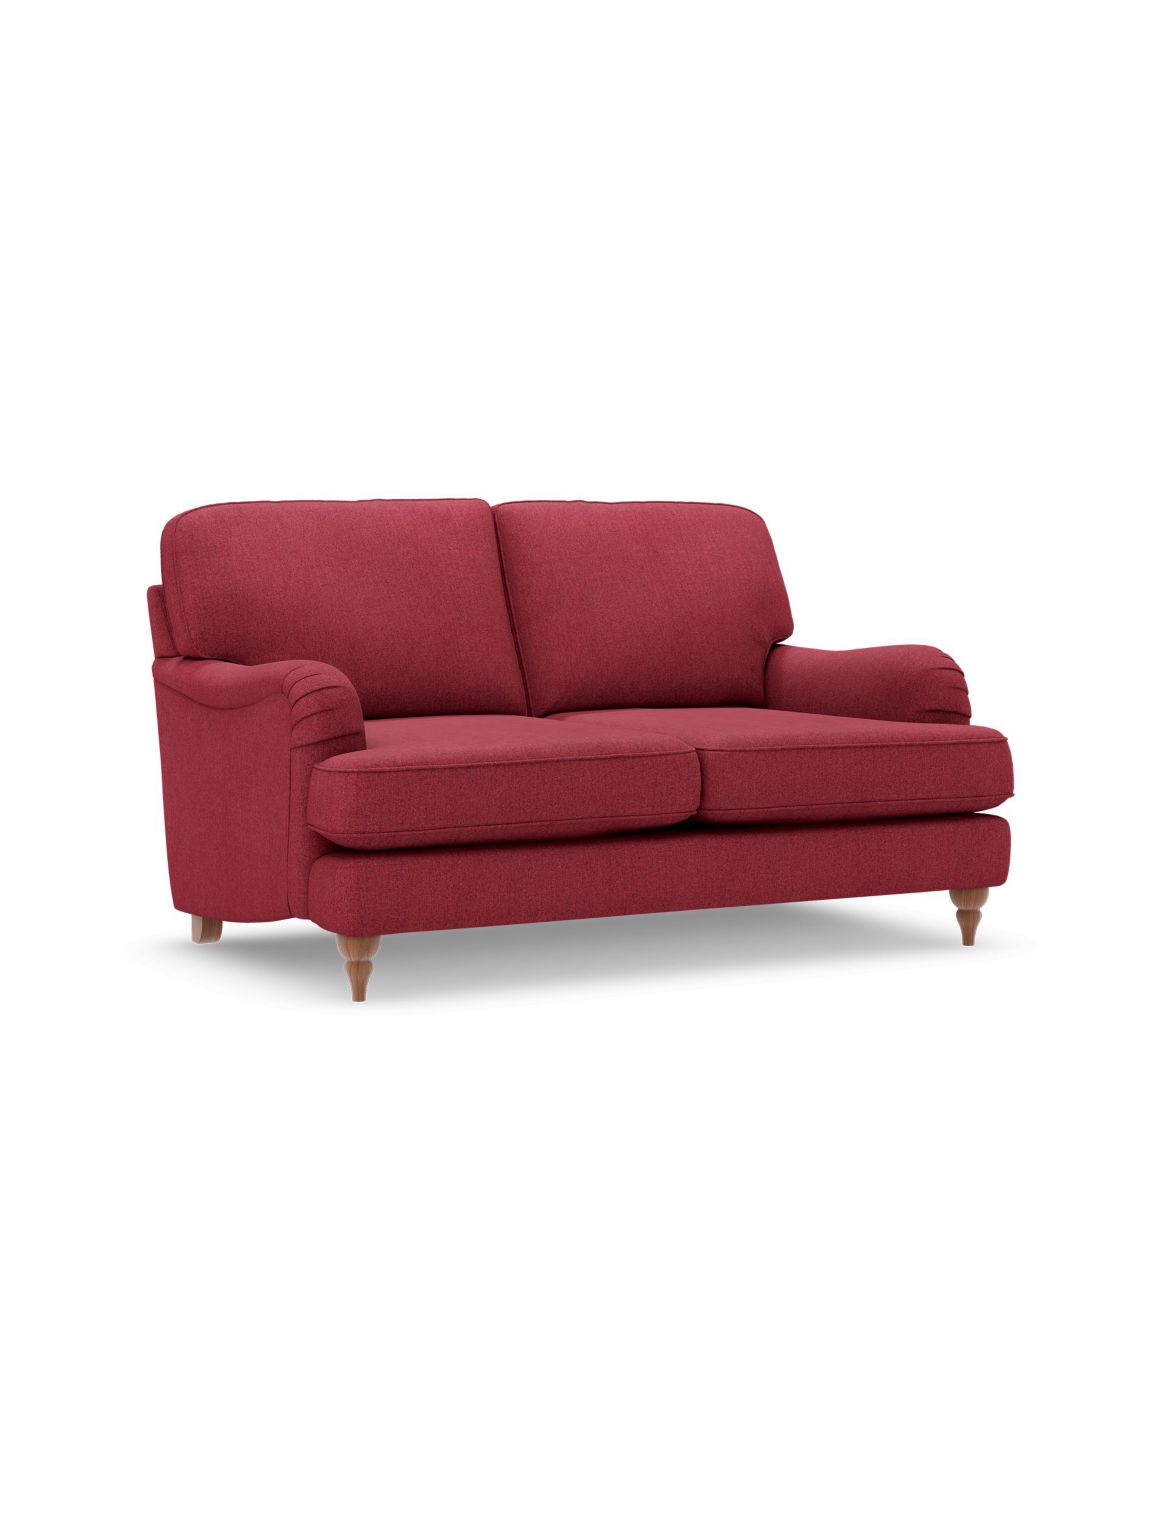 Rochester Small Sofa red